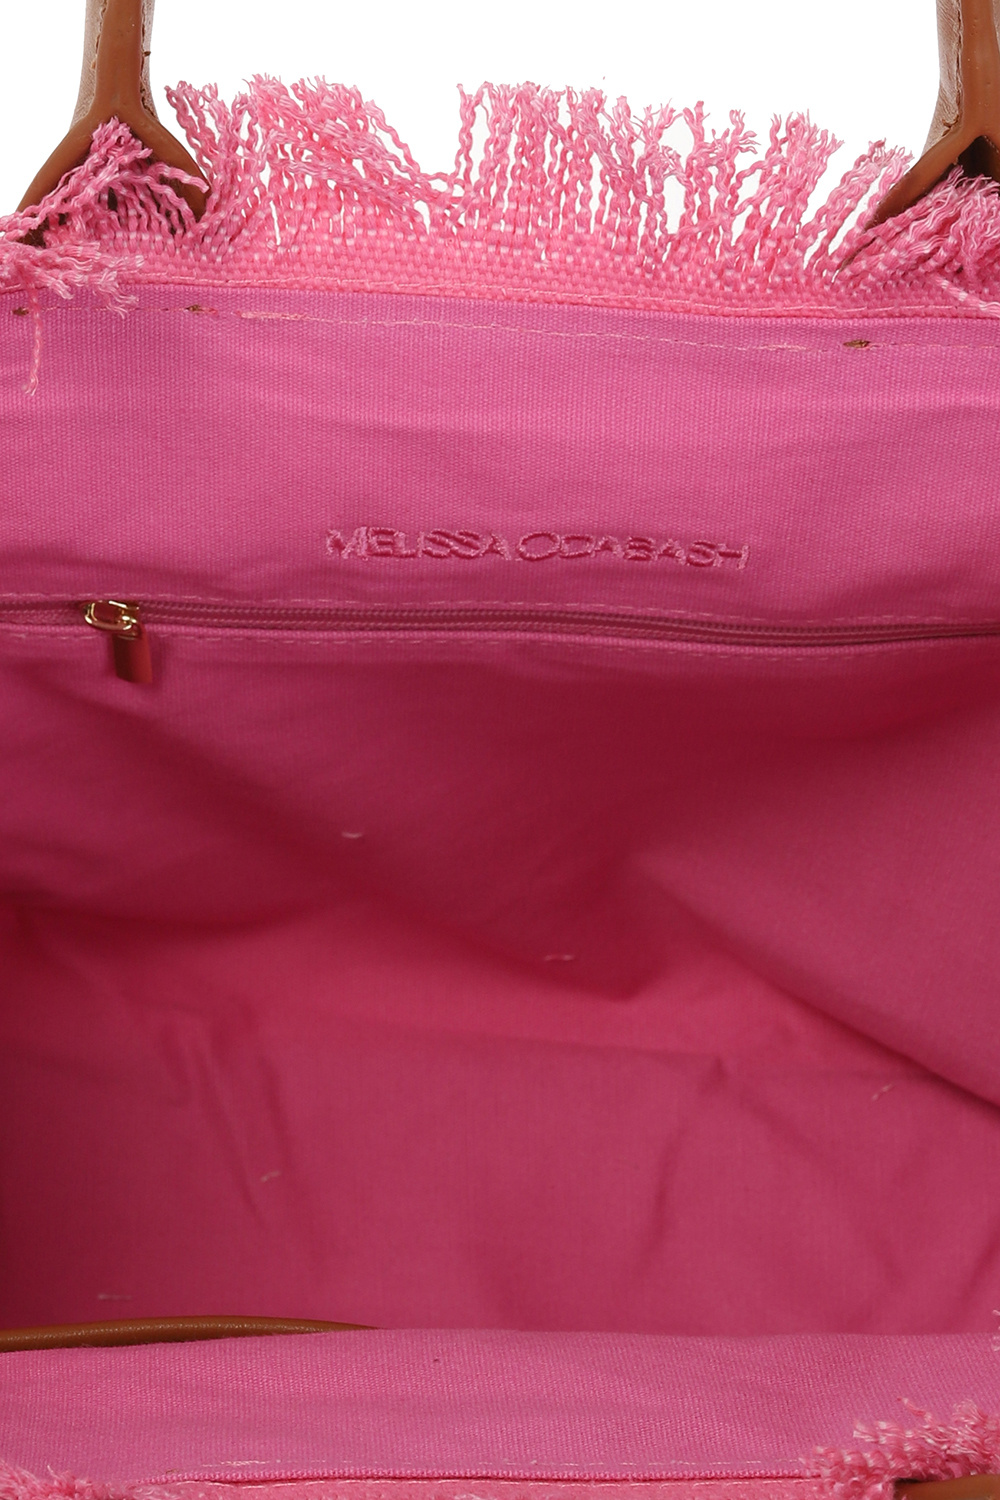 Melissa Odabash ‘Porto Cervo Mini’ shopper doccasion bag